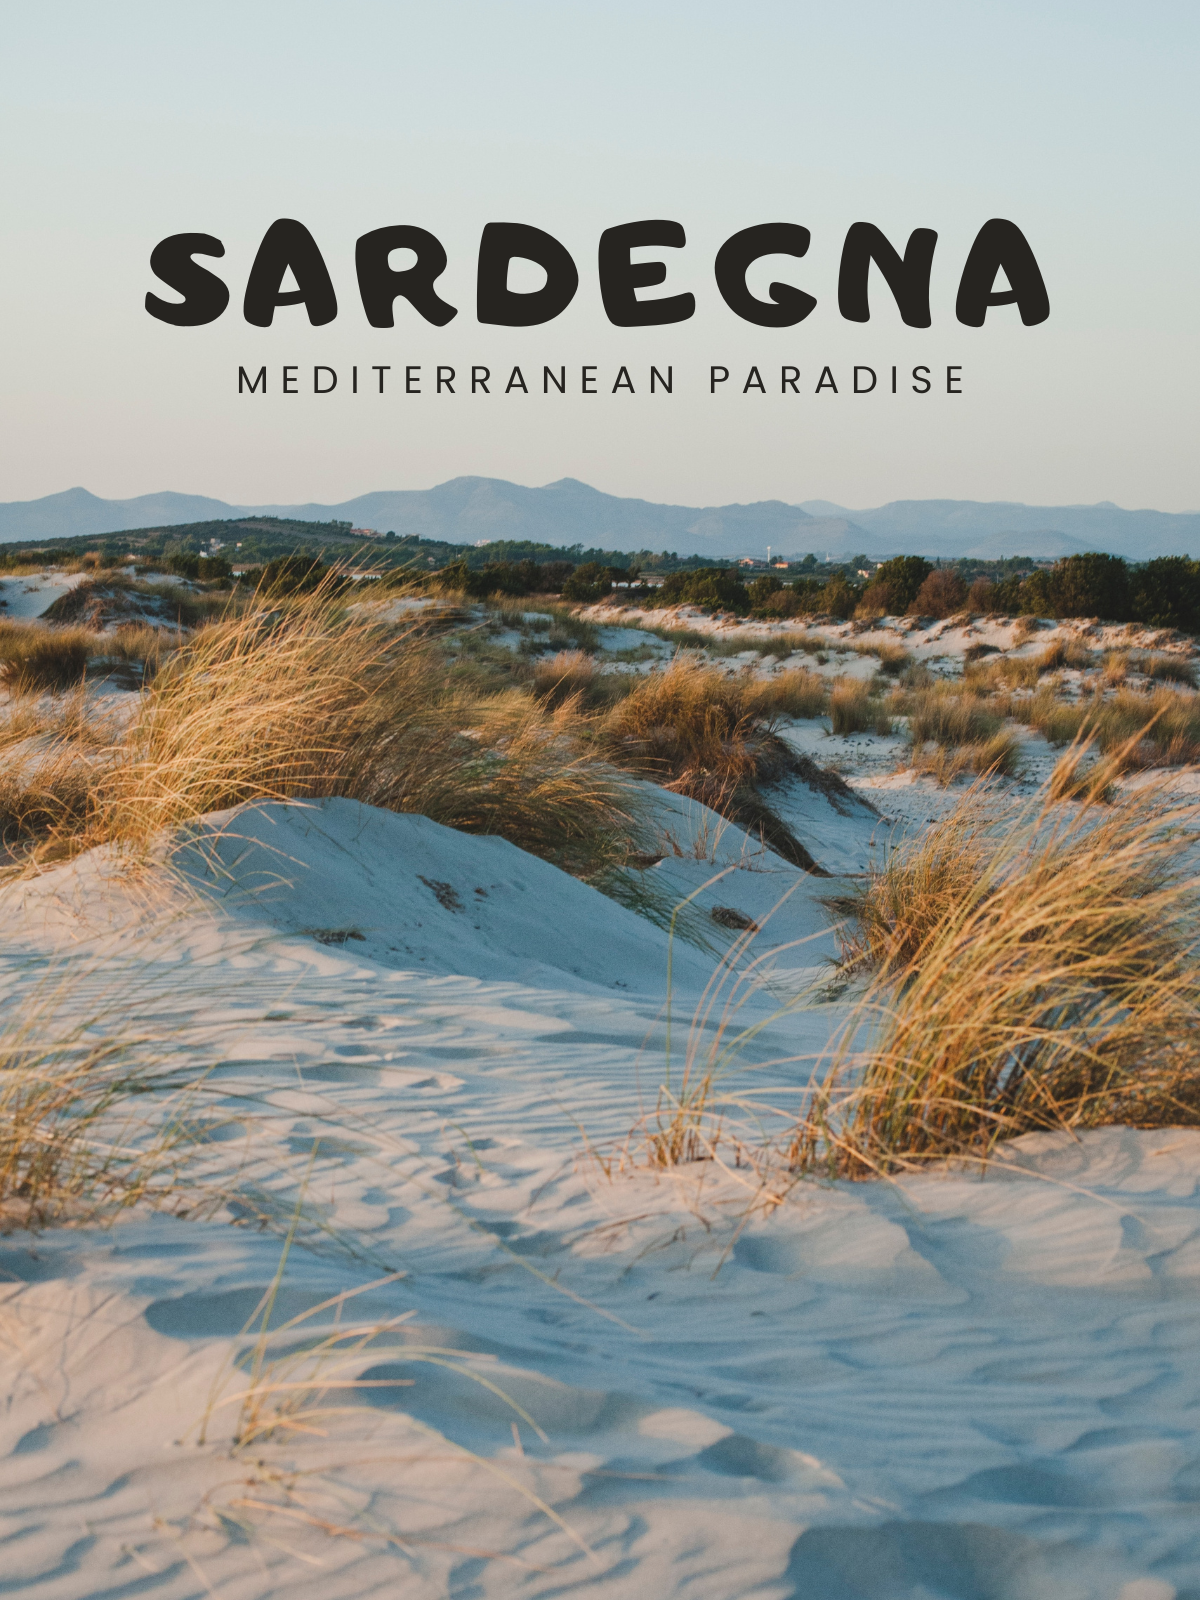 Sardegna: un paradiso Mediterraneo